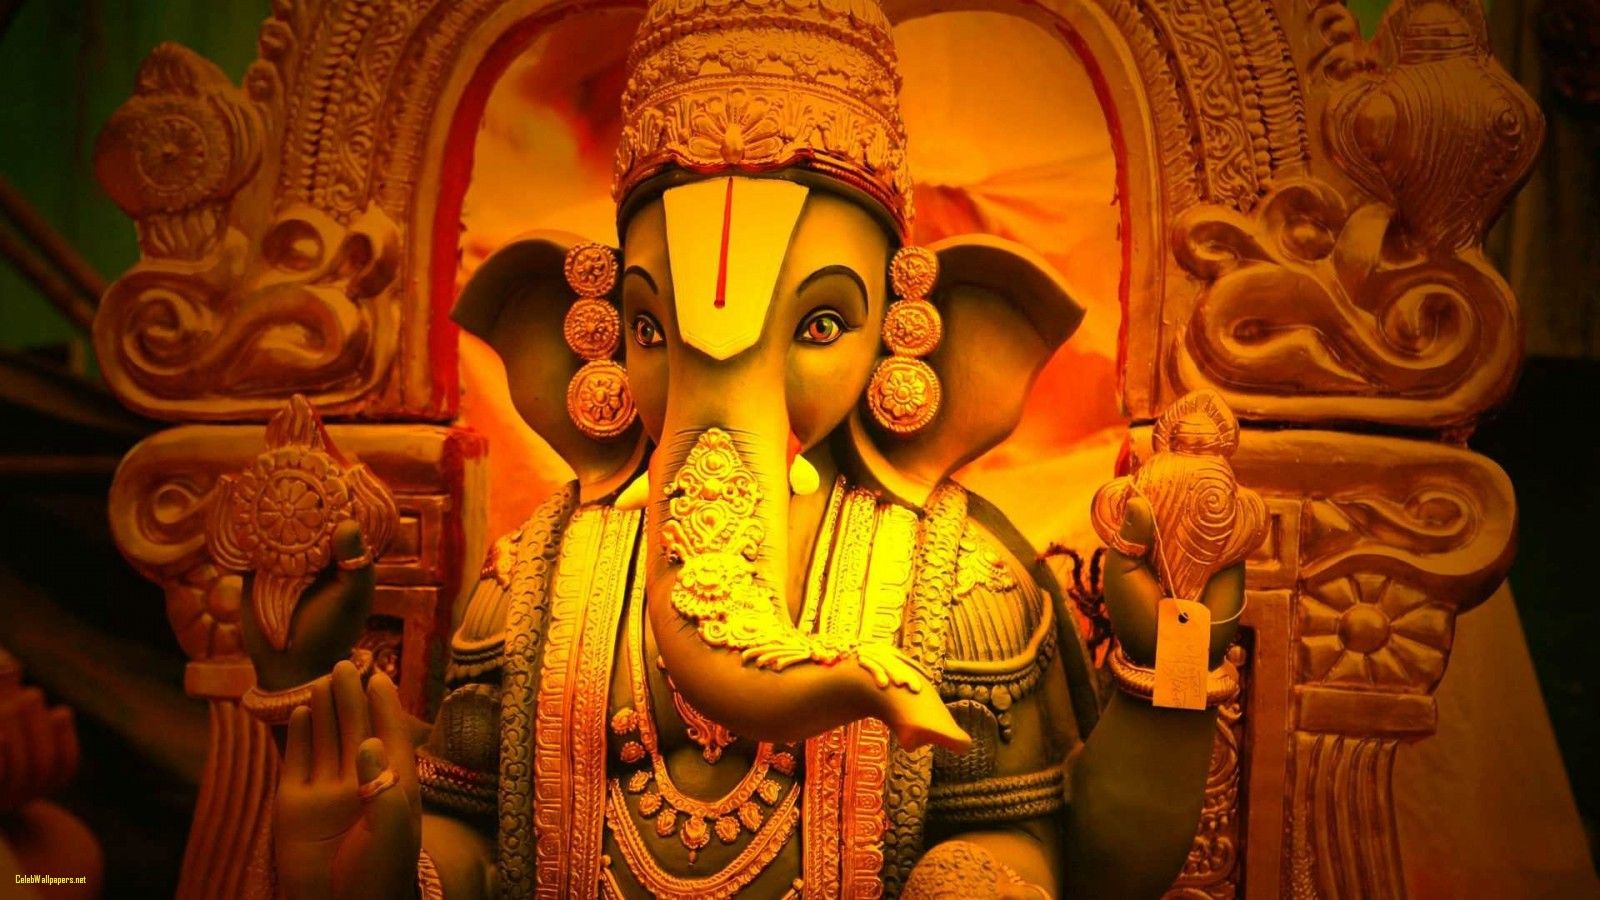 God Hd Wallpapers Hd Hindu God Wallpapers Image - Lord Ganesha Hd -  1600x900 Wallpaper 